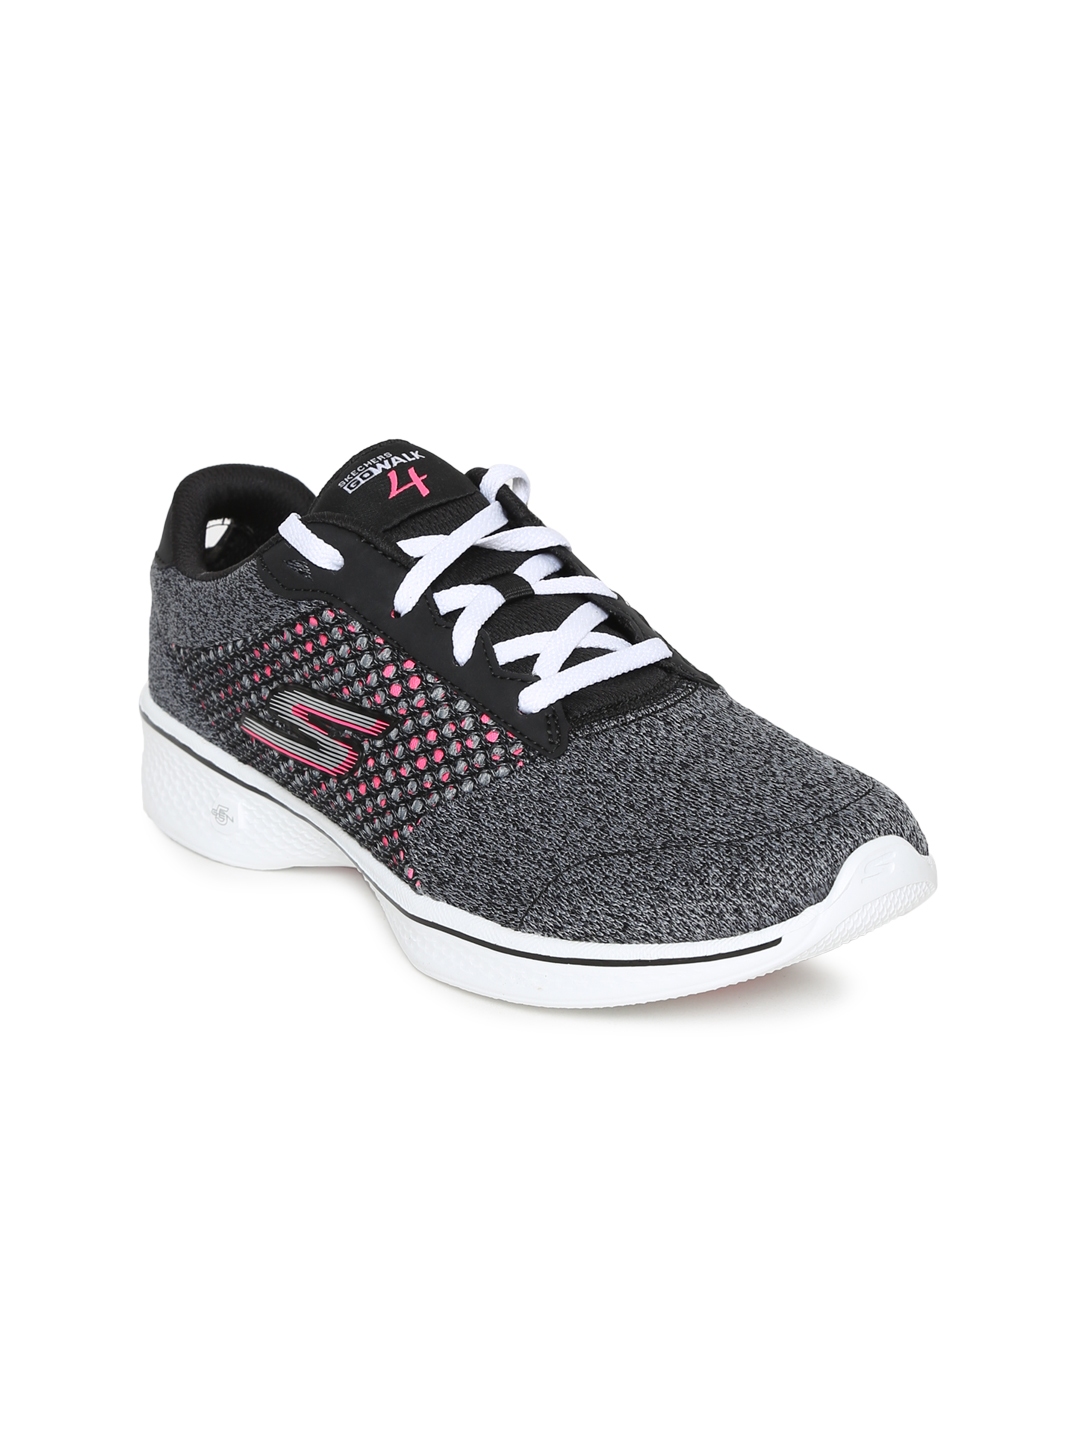 Buy Skechers Women Grey GO WALK 4 EXCEED Walking Shoes - Sports Shoes for Women 2201117 |